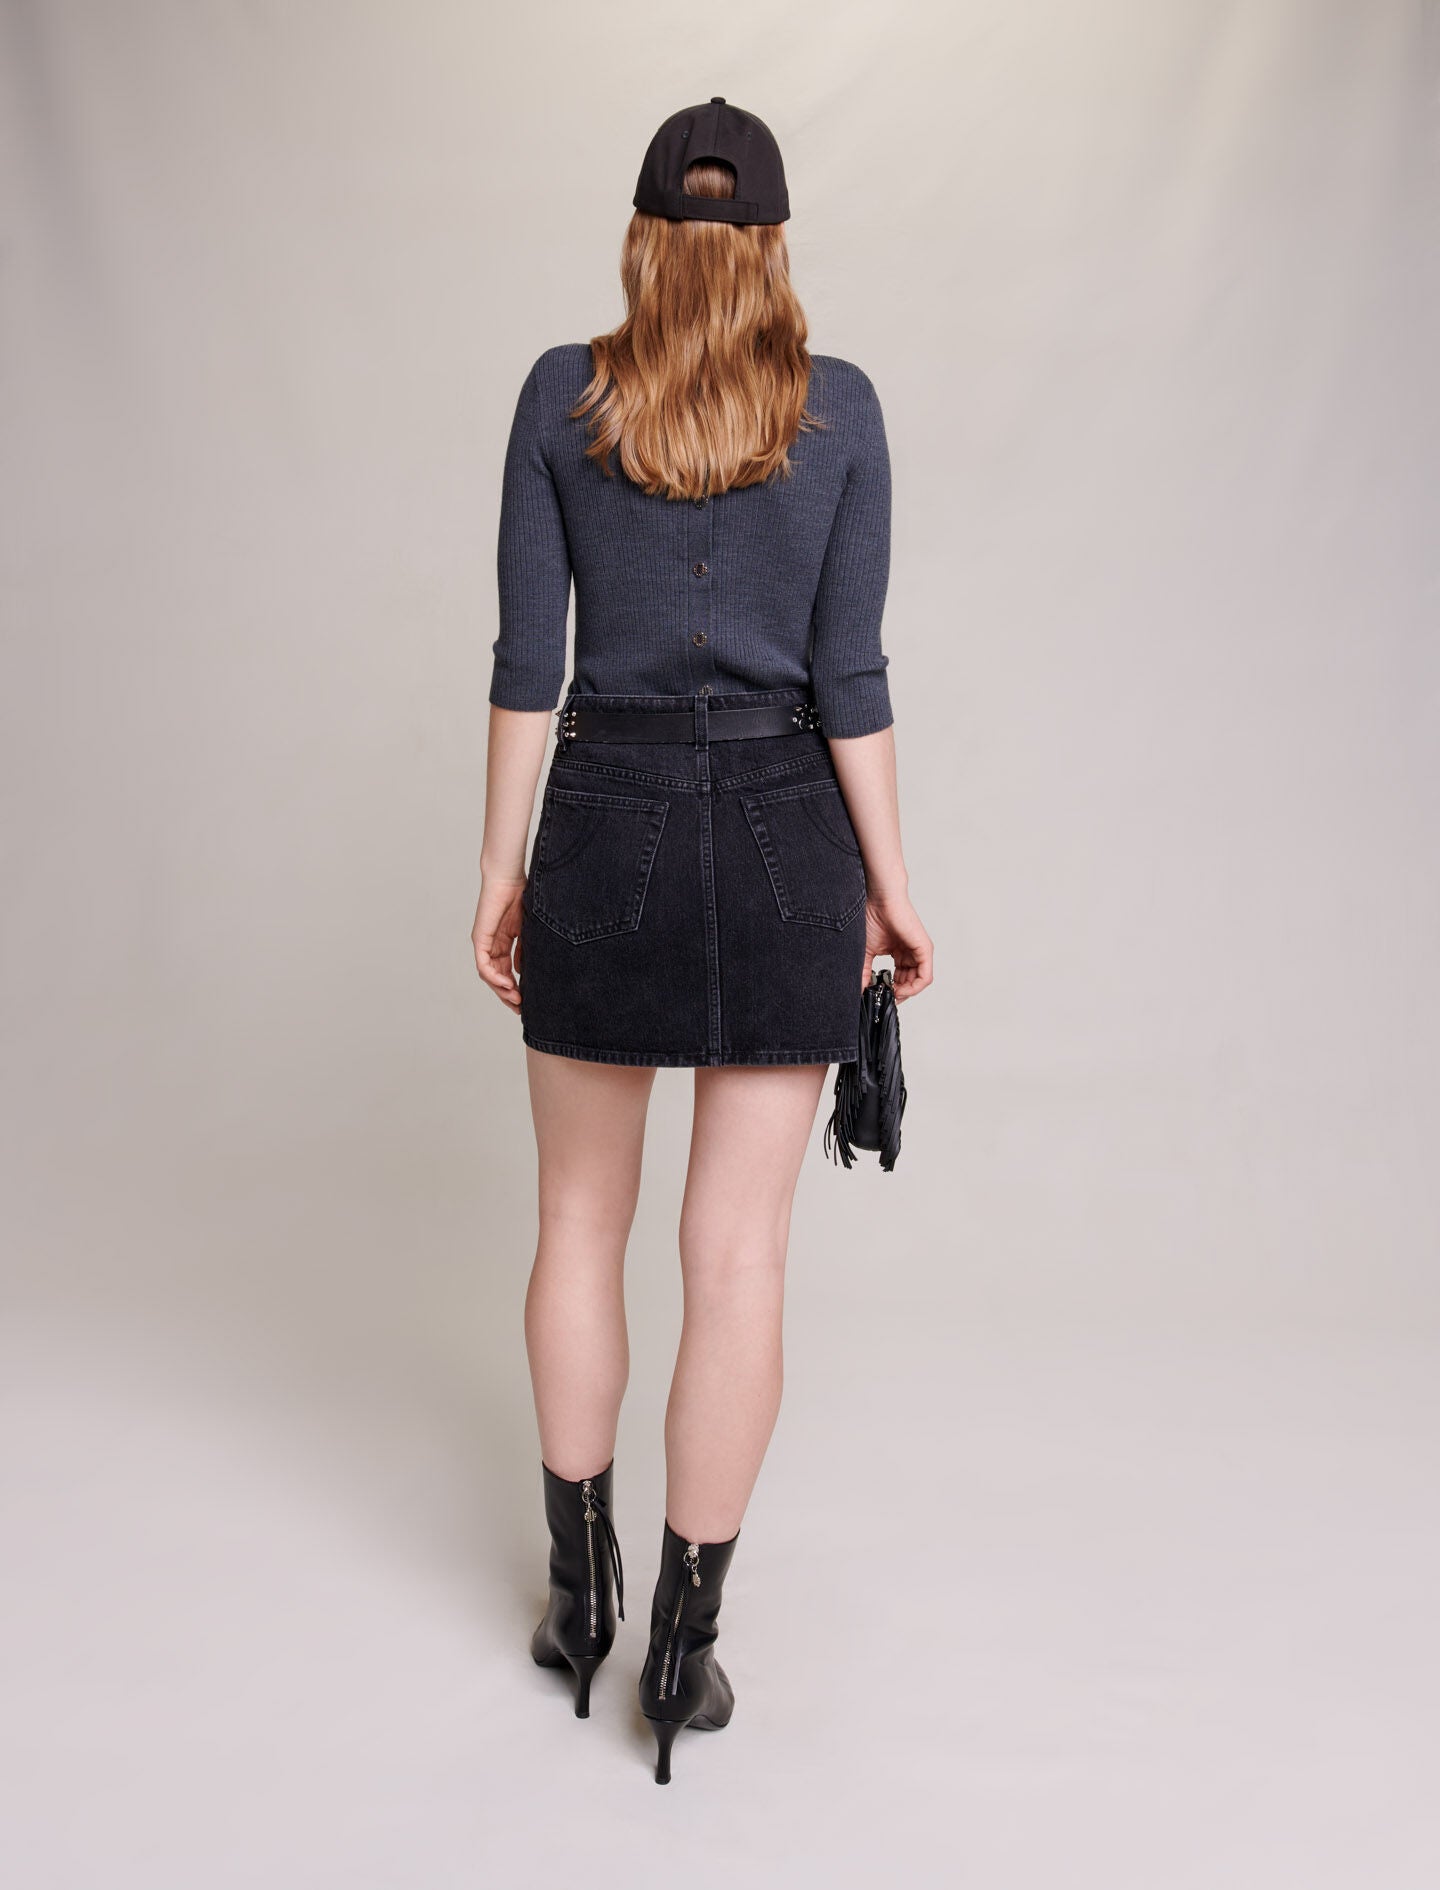 Black-short denim skirt with rhinestones